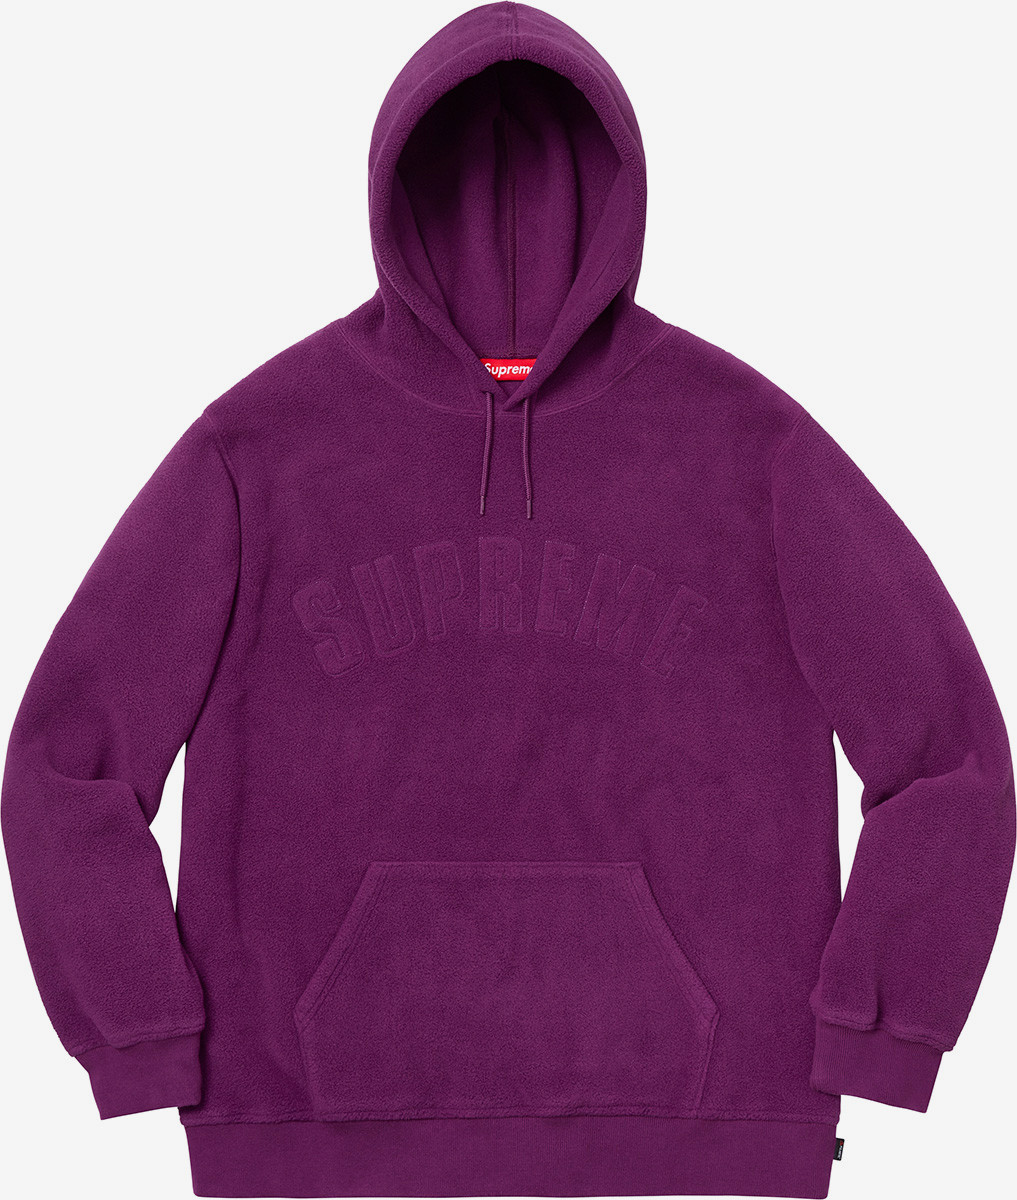 supreme-drop-list-polartec-hooded-sweatshirt-1017x1200.jpg